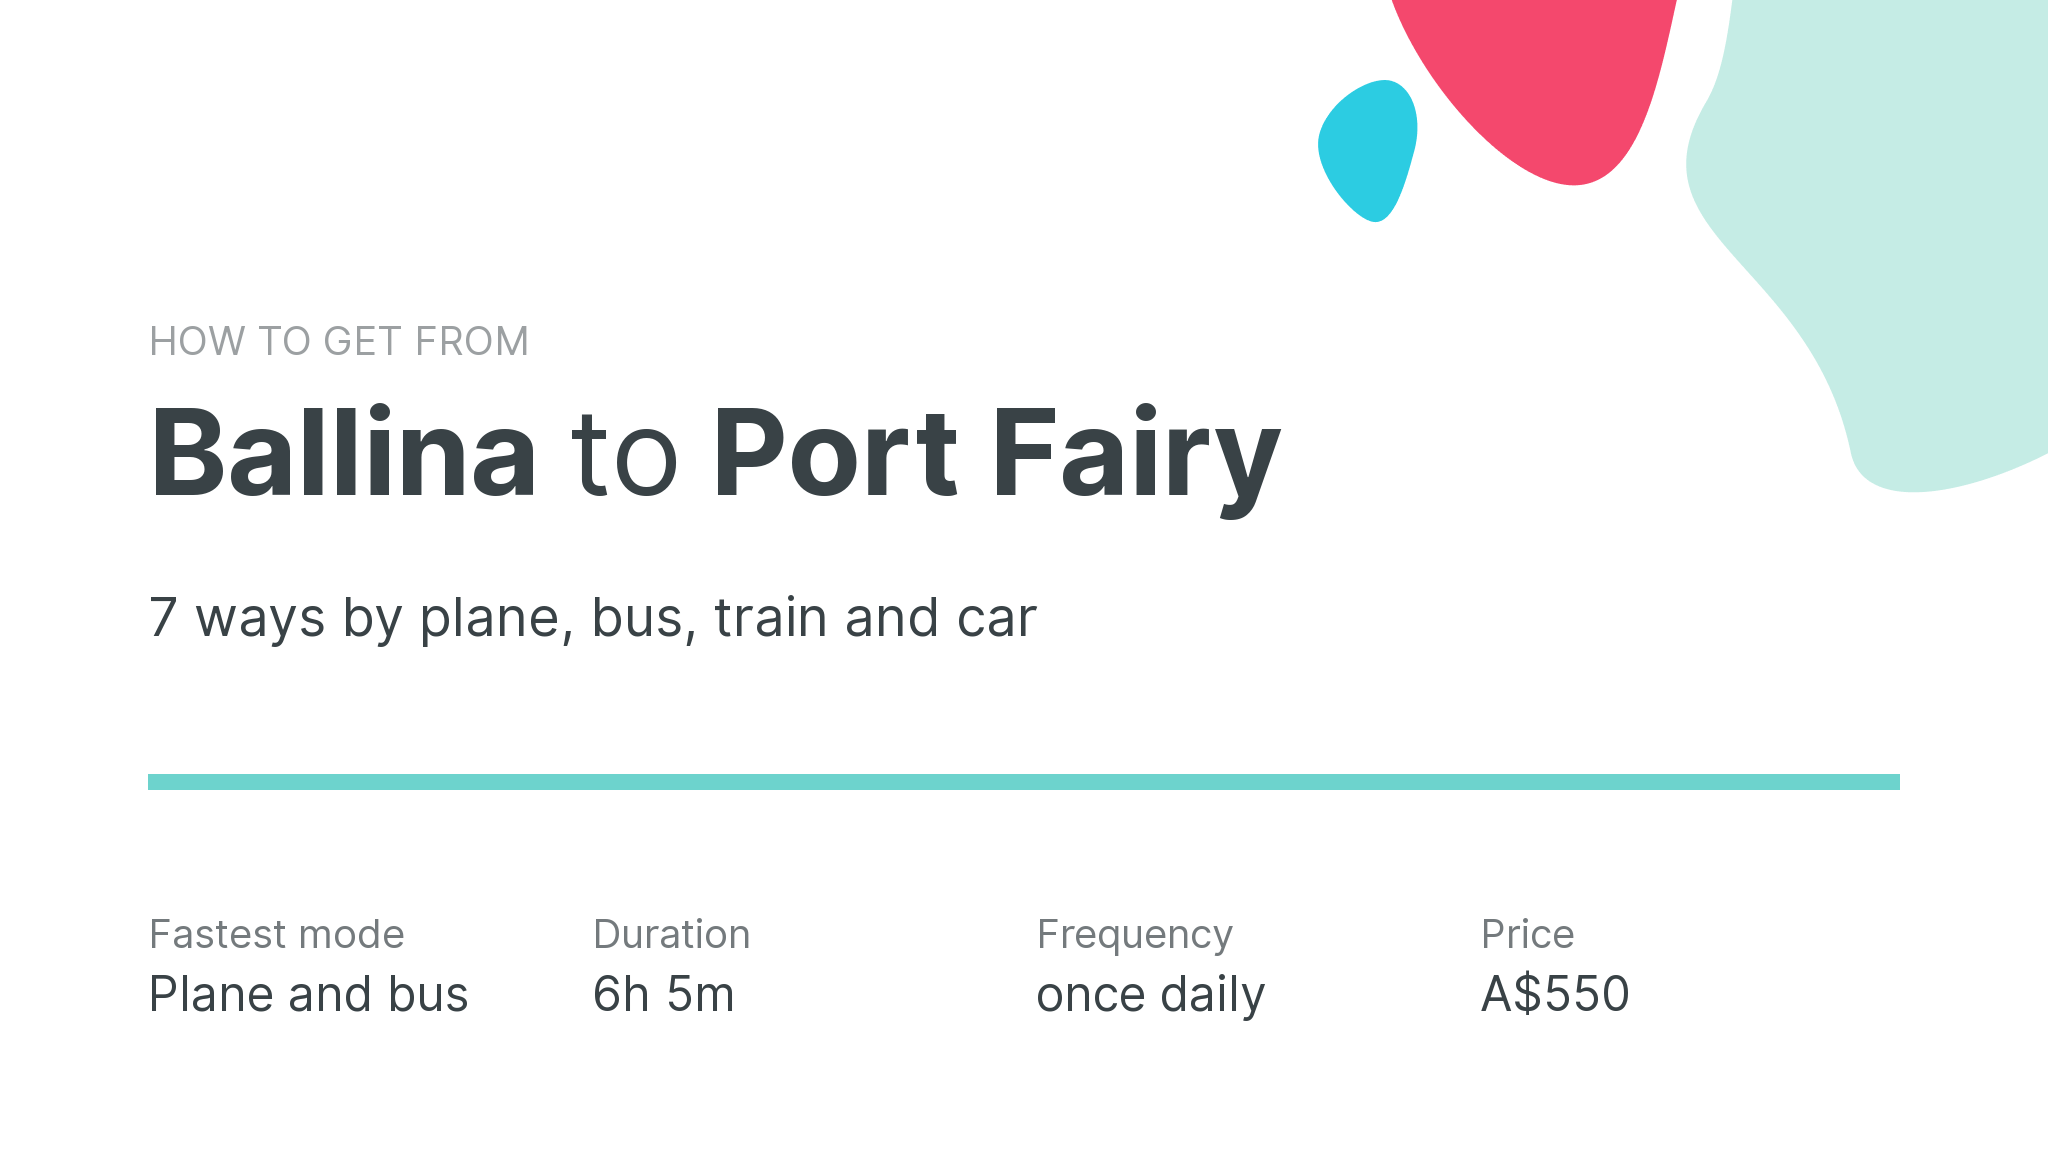 How do I get from Ballina to Port Fairy